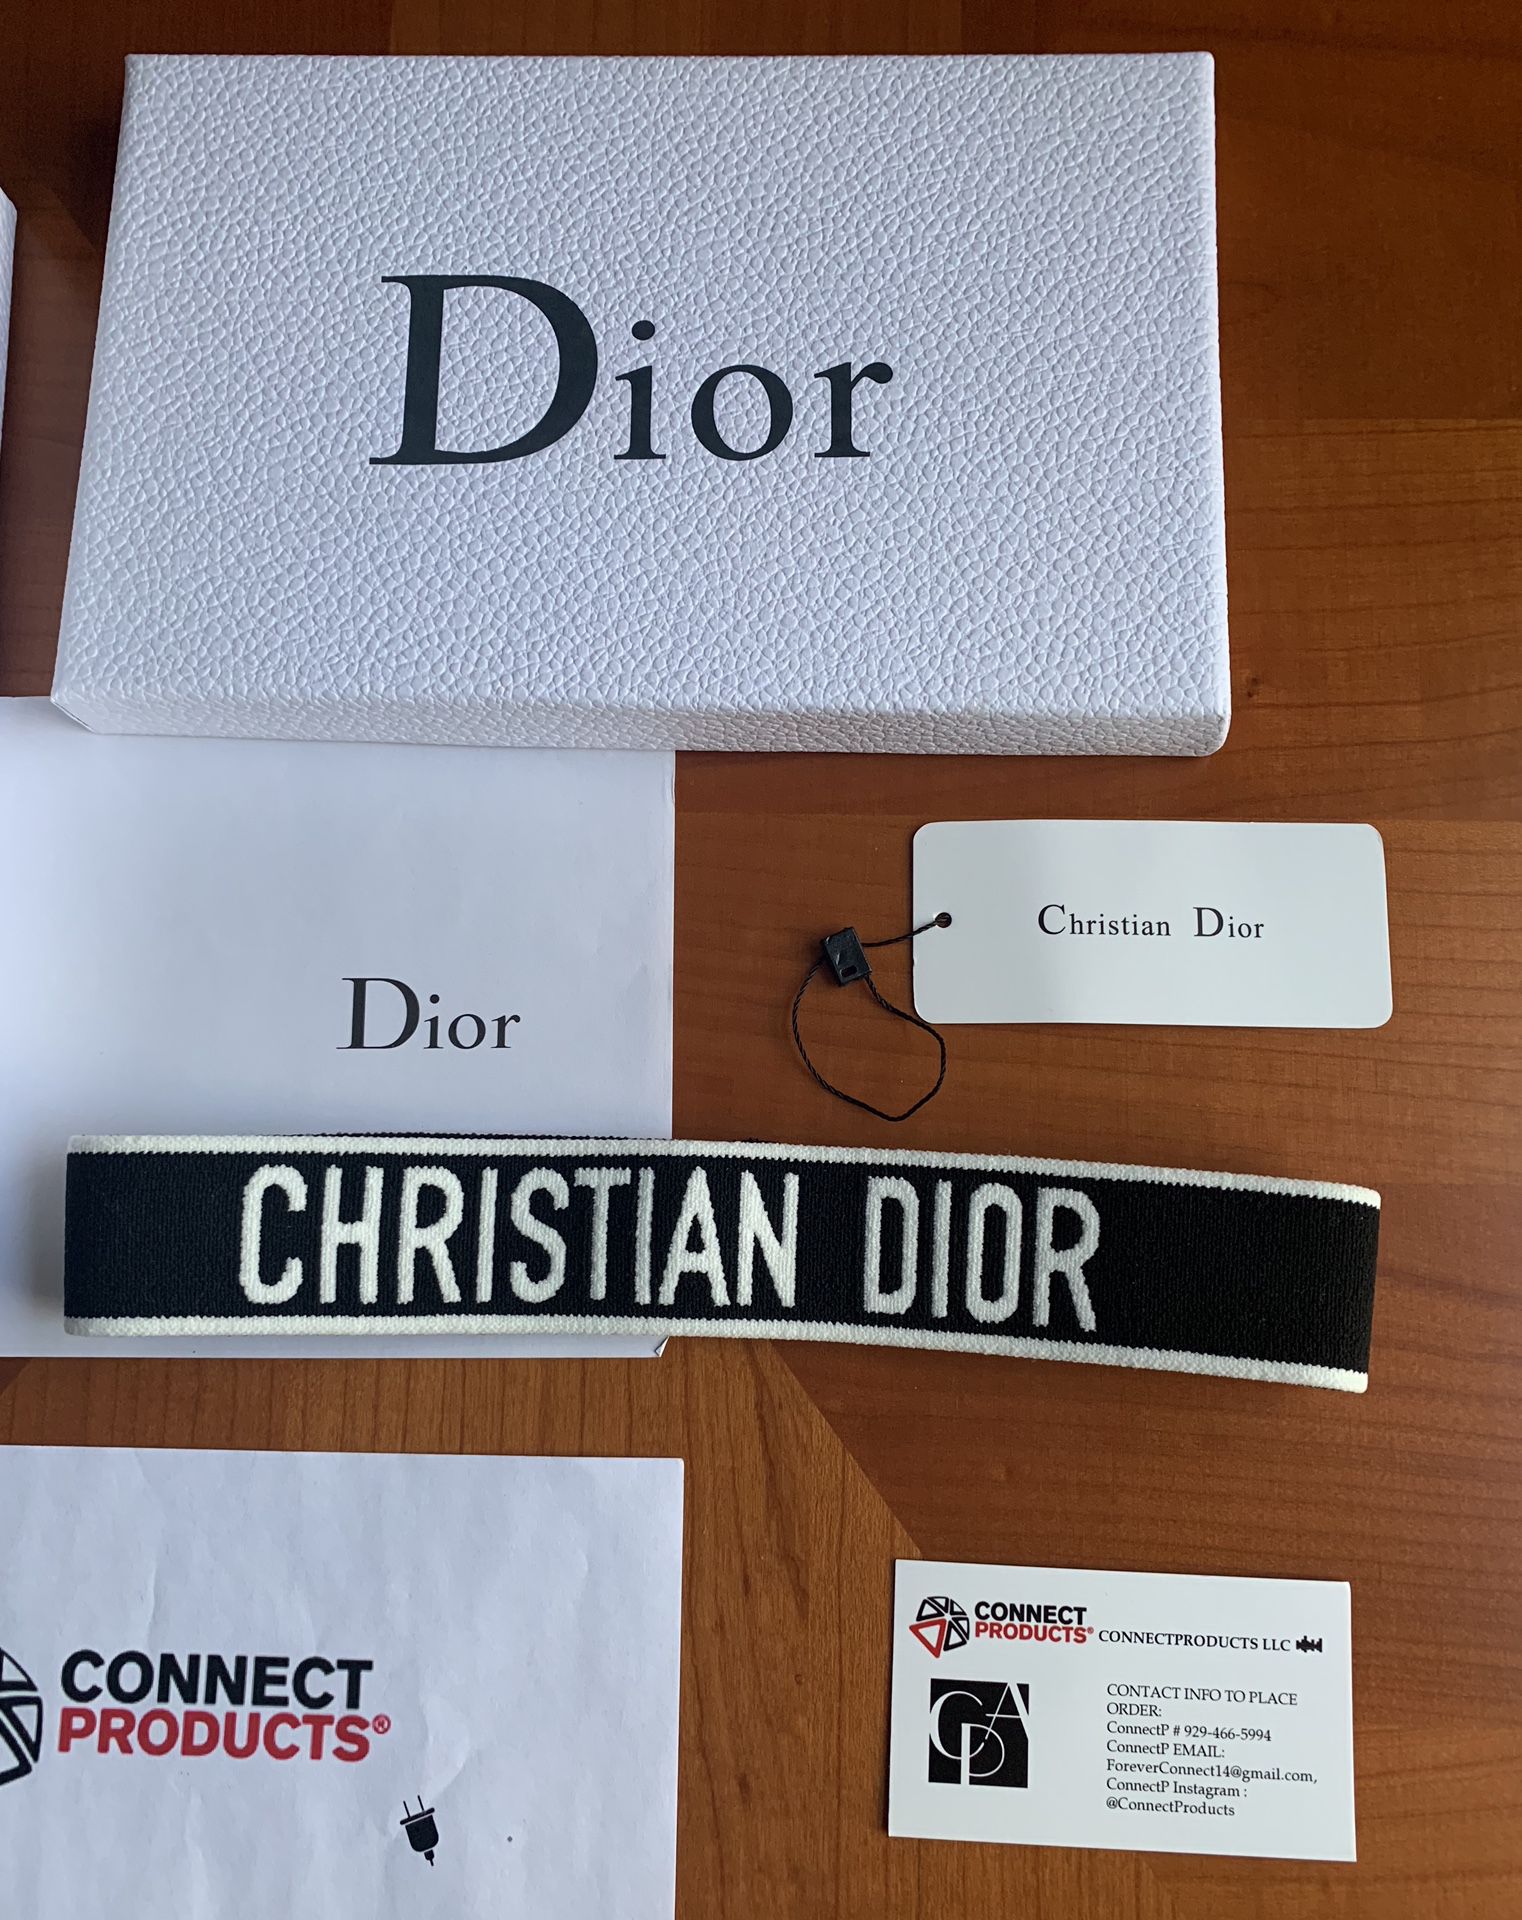 Christian Dior Black, Pattern Print Cotton Headband w/ Tags